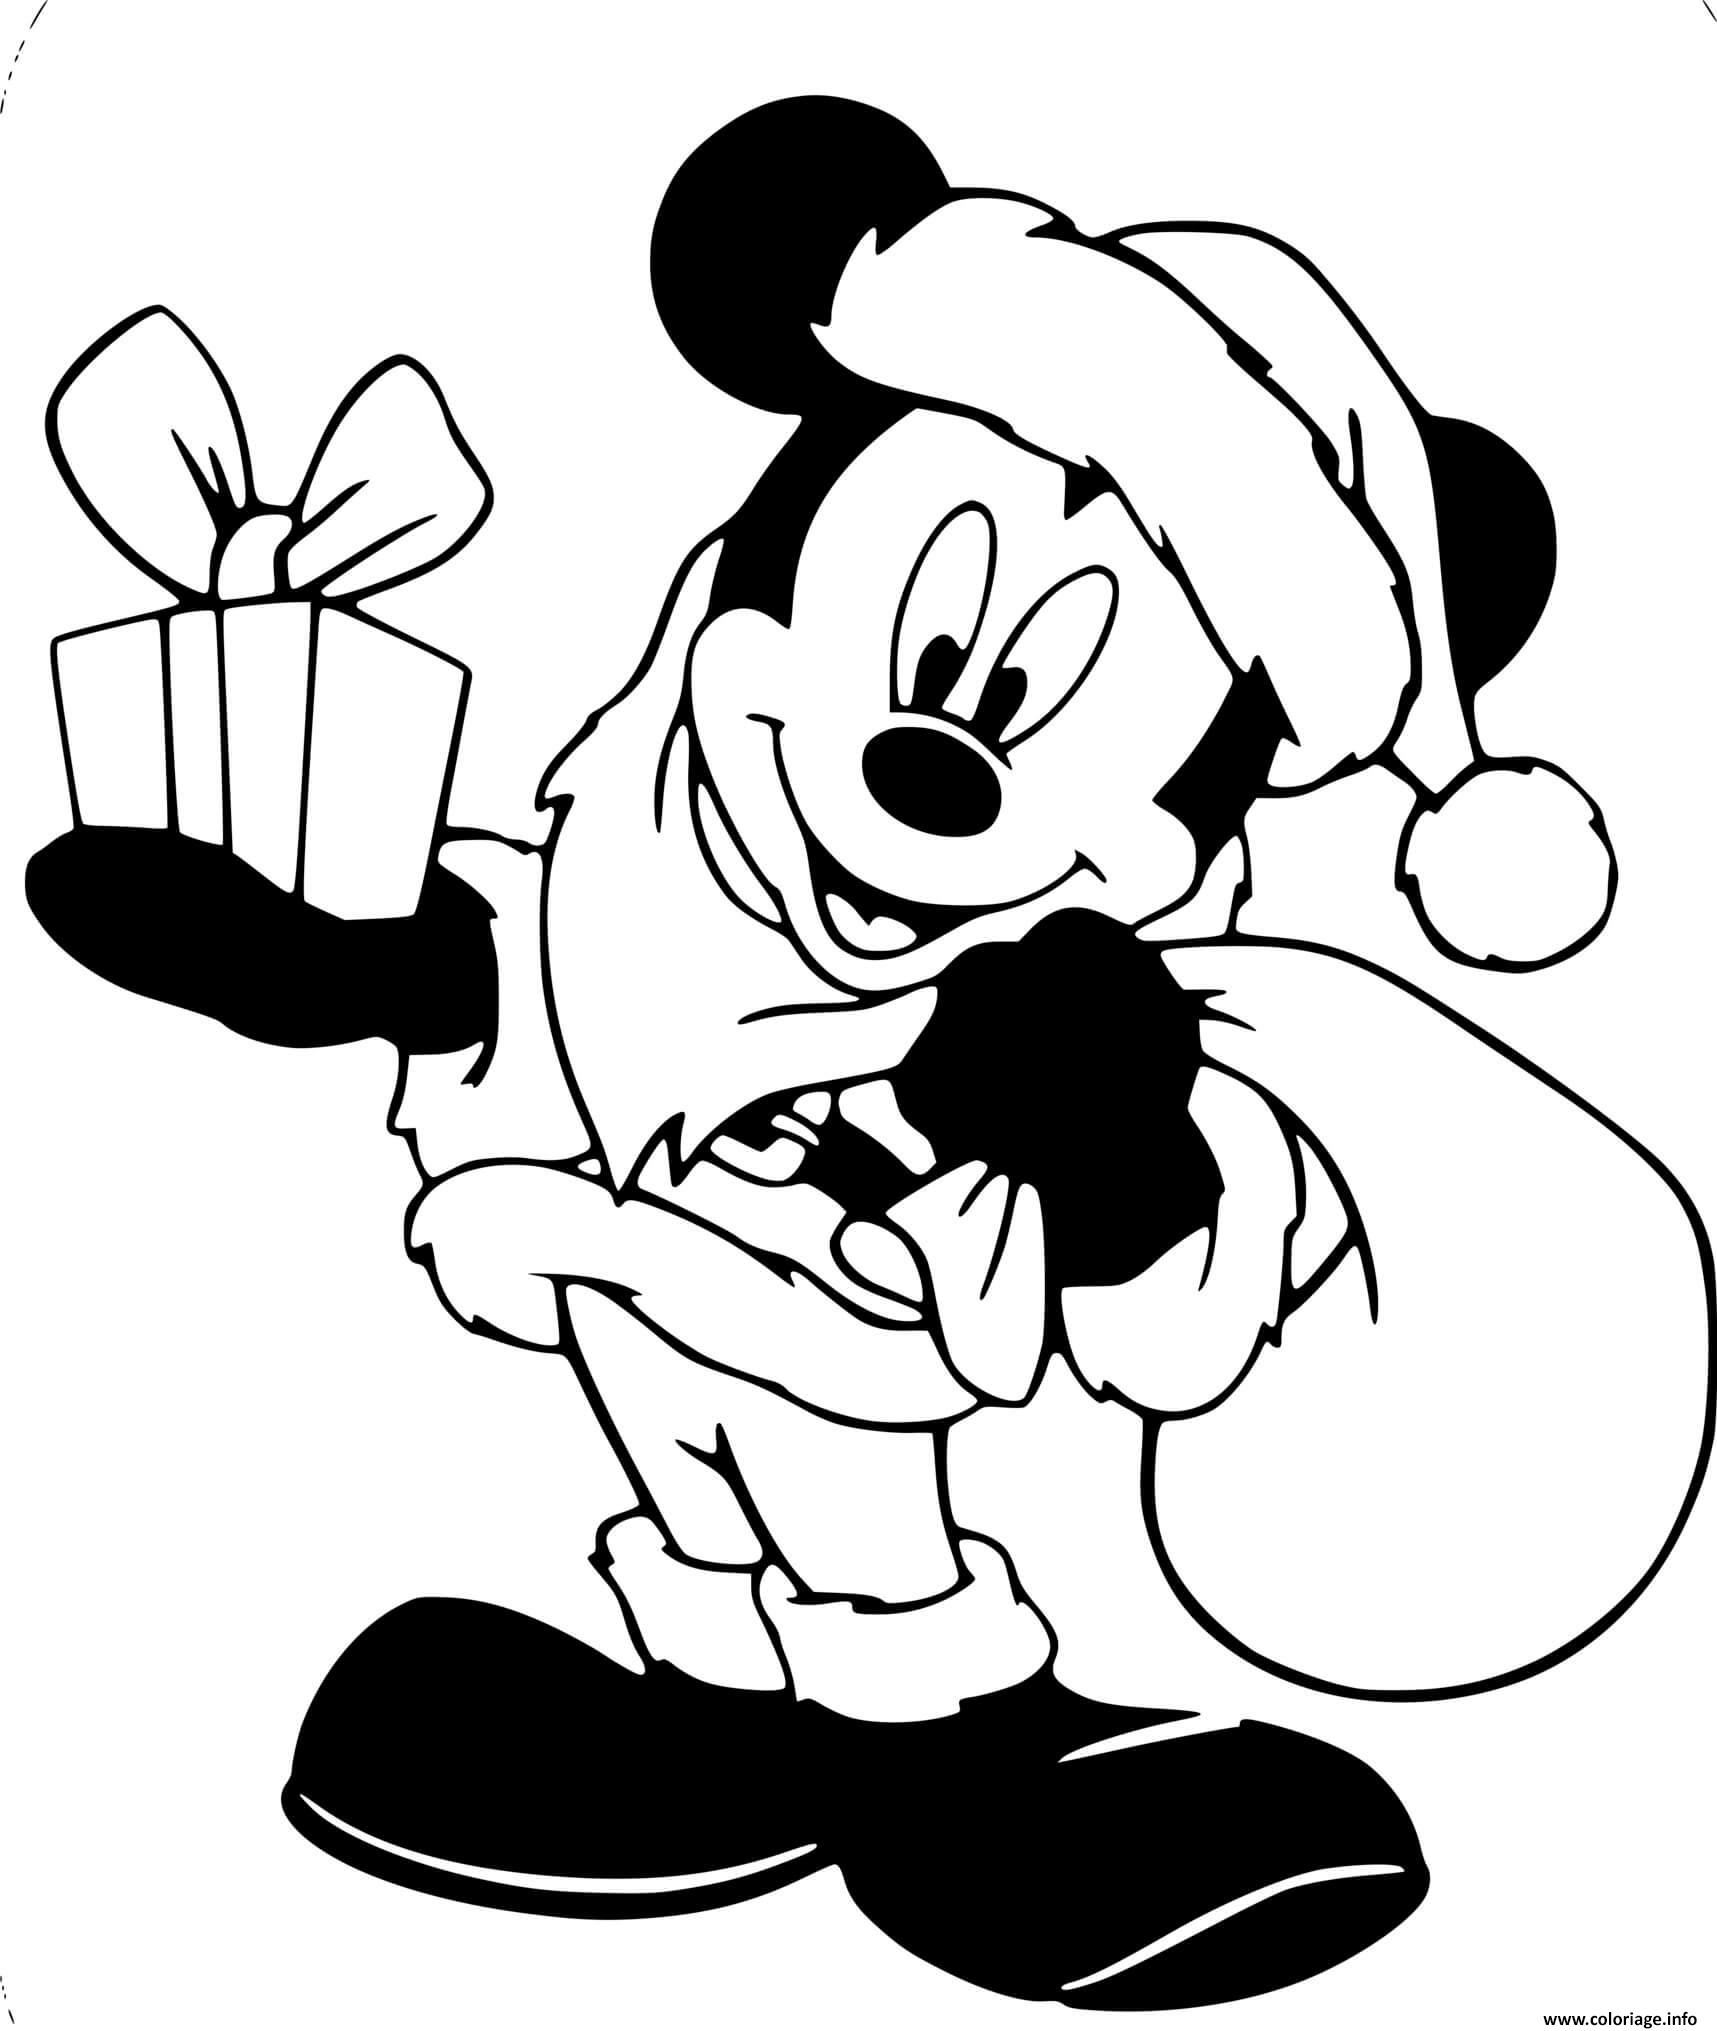 Coloriage Mickey Mouse As Santa Claus Dessin Noel Disney à imprimer